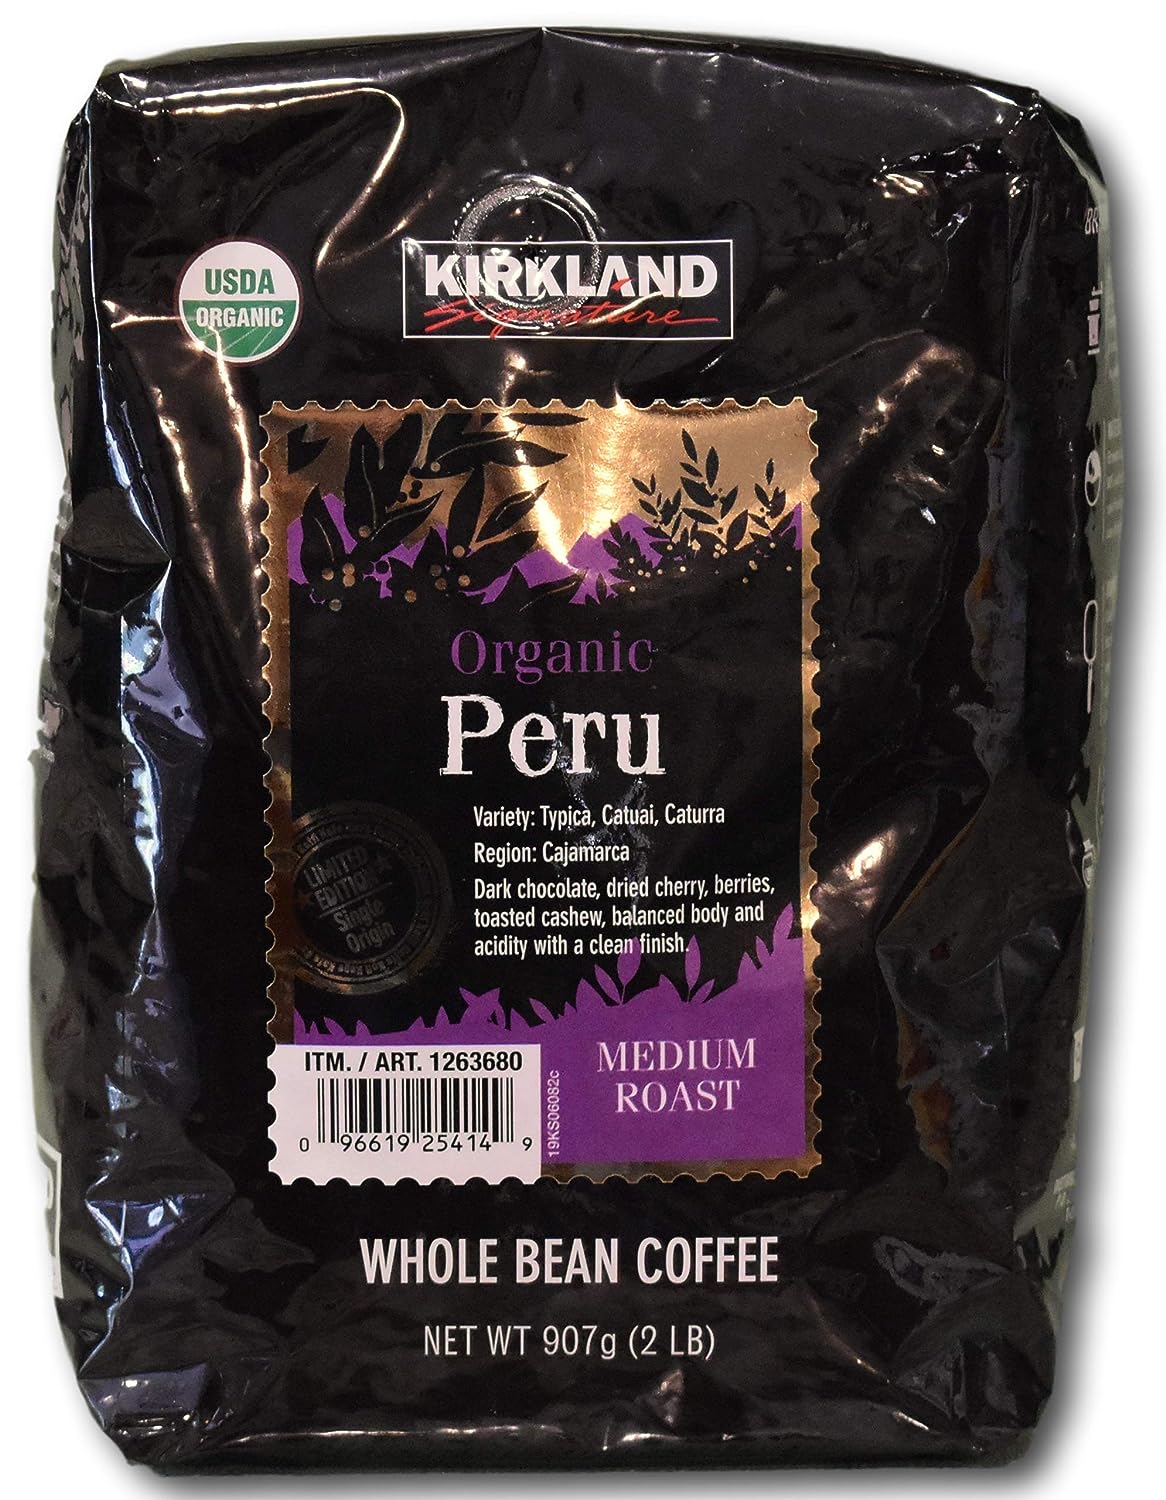 Kirkland Signature Organic Whole Bean Coffee from Peru- Whole Bean Medium Roast